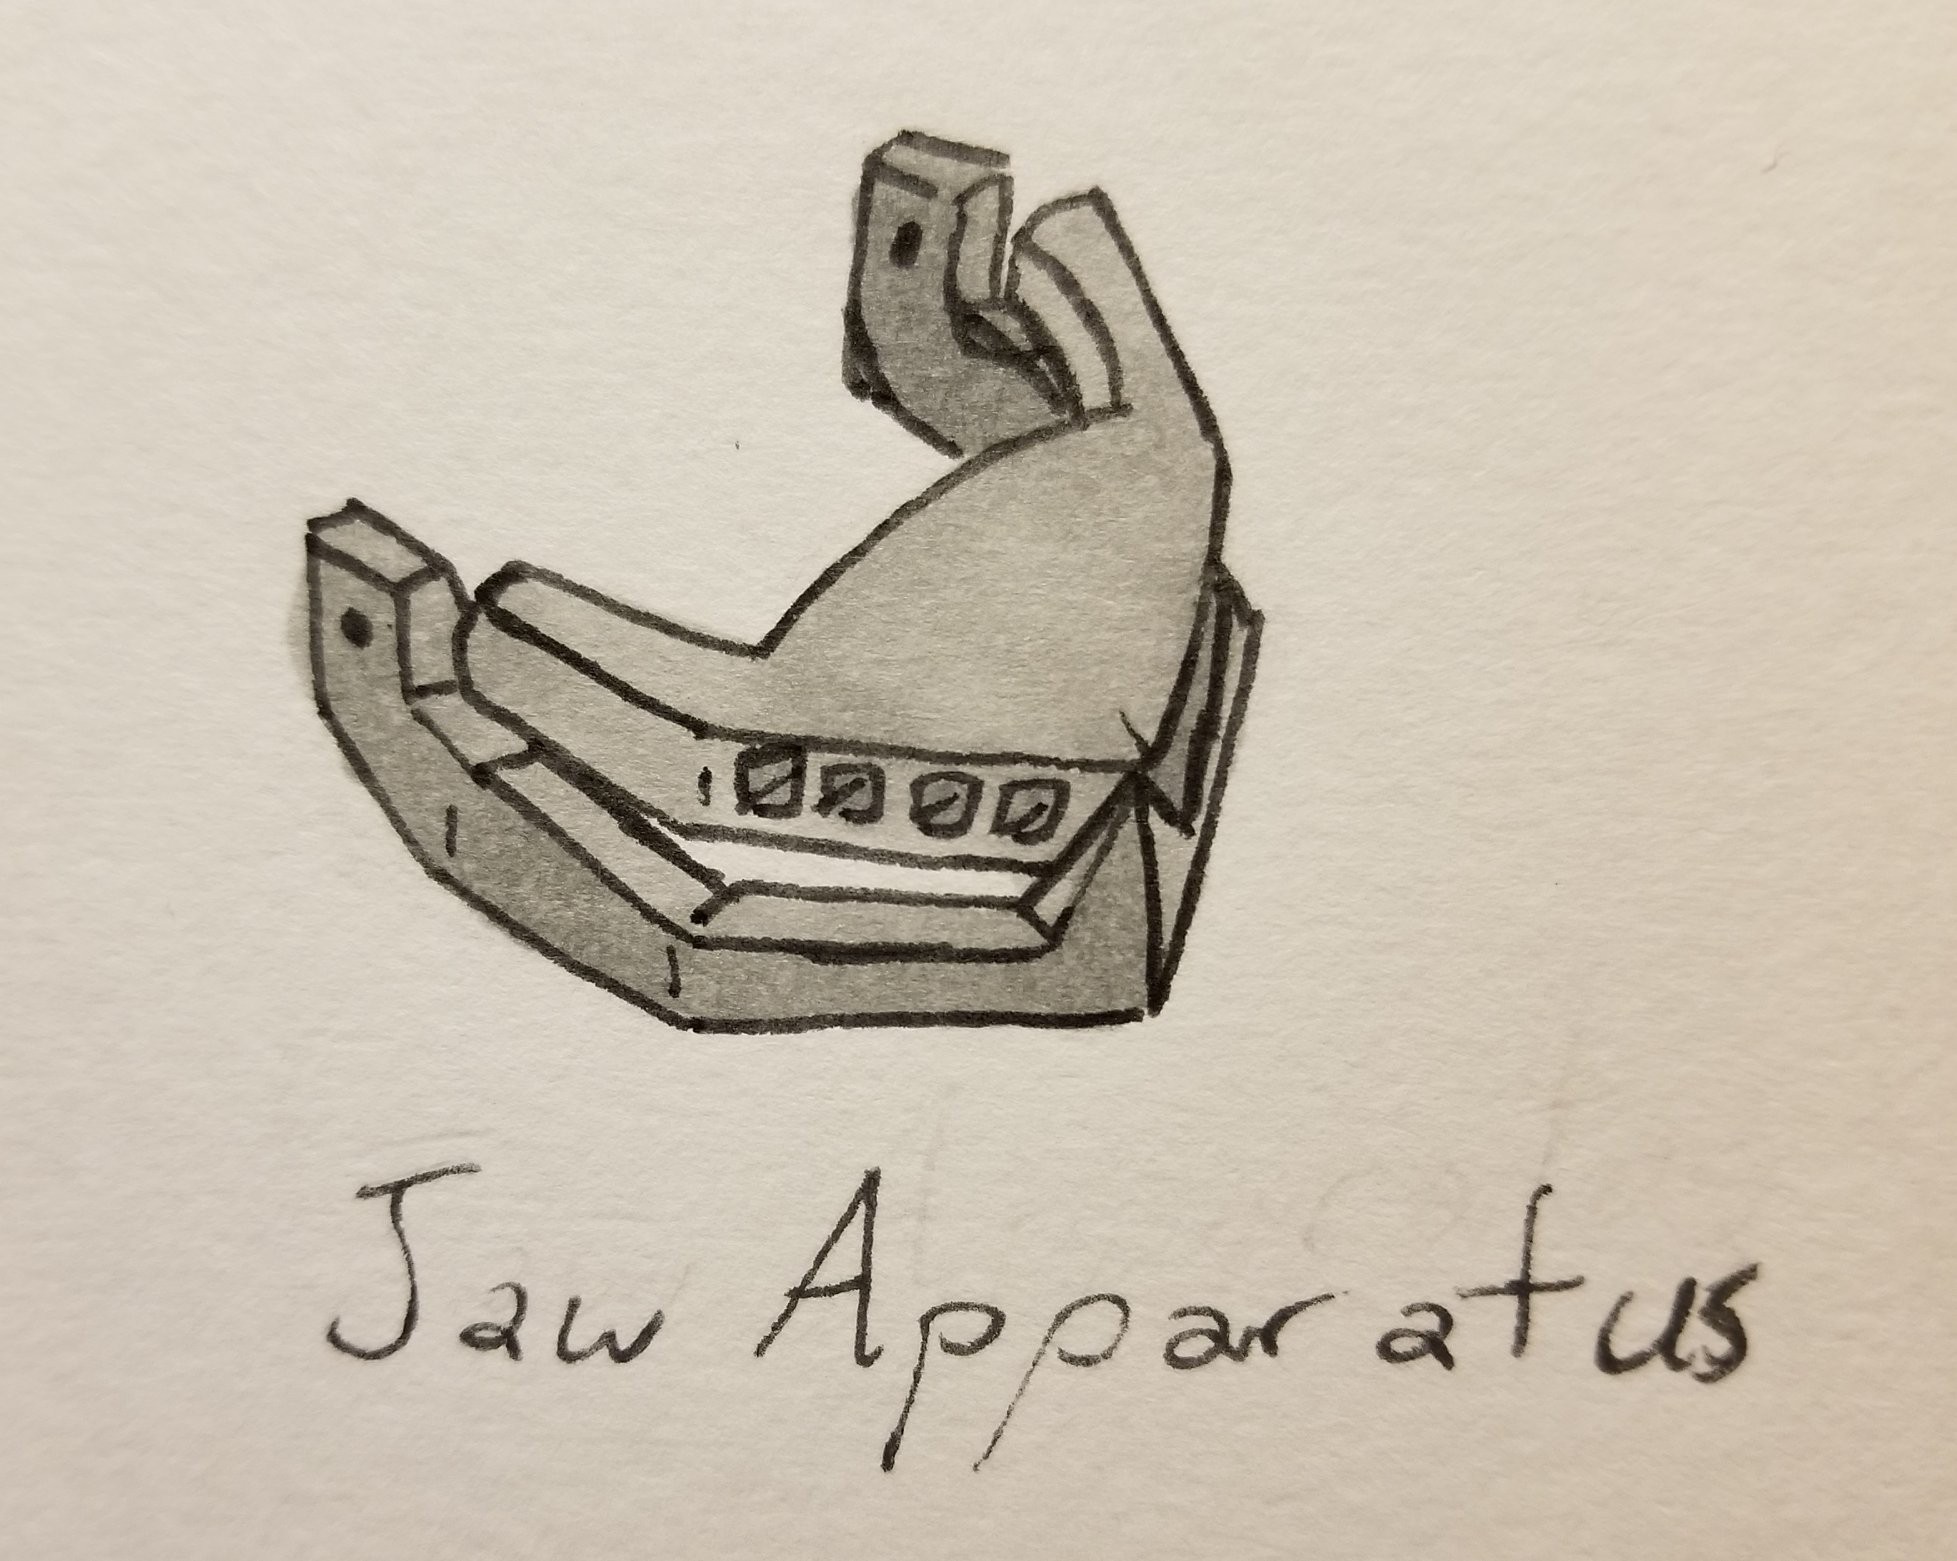 Jaw Apparatus